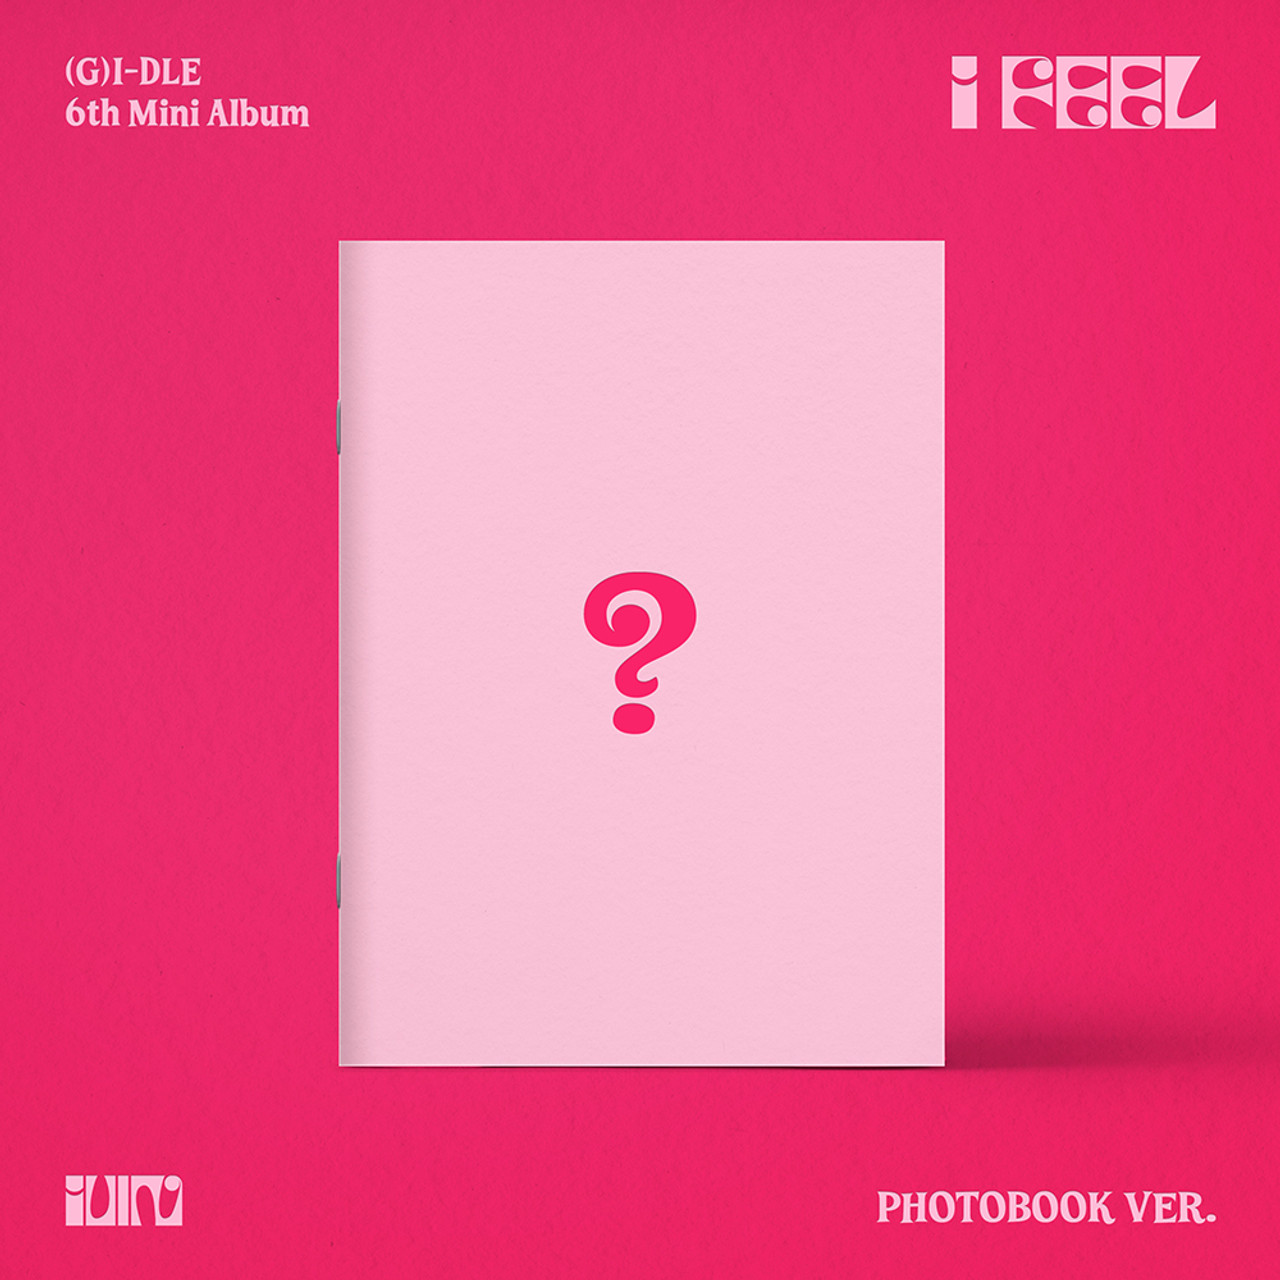 GIDLE  6th Mini Album I feel PhotoBook Ver  and  poster